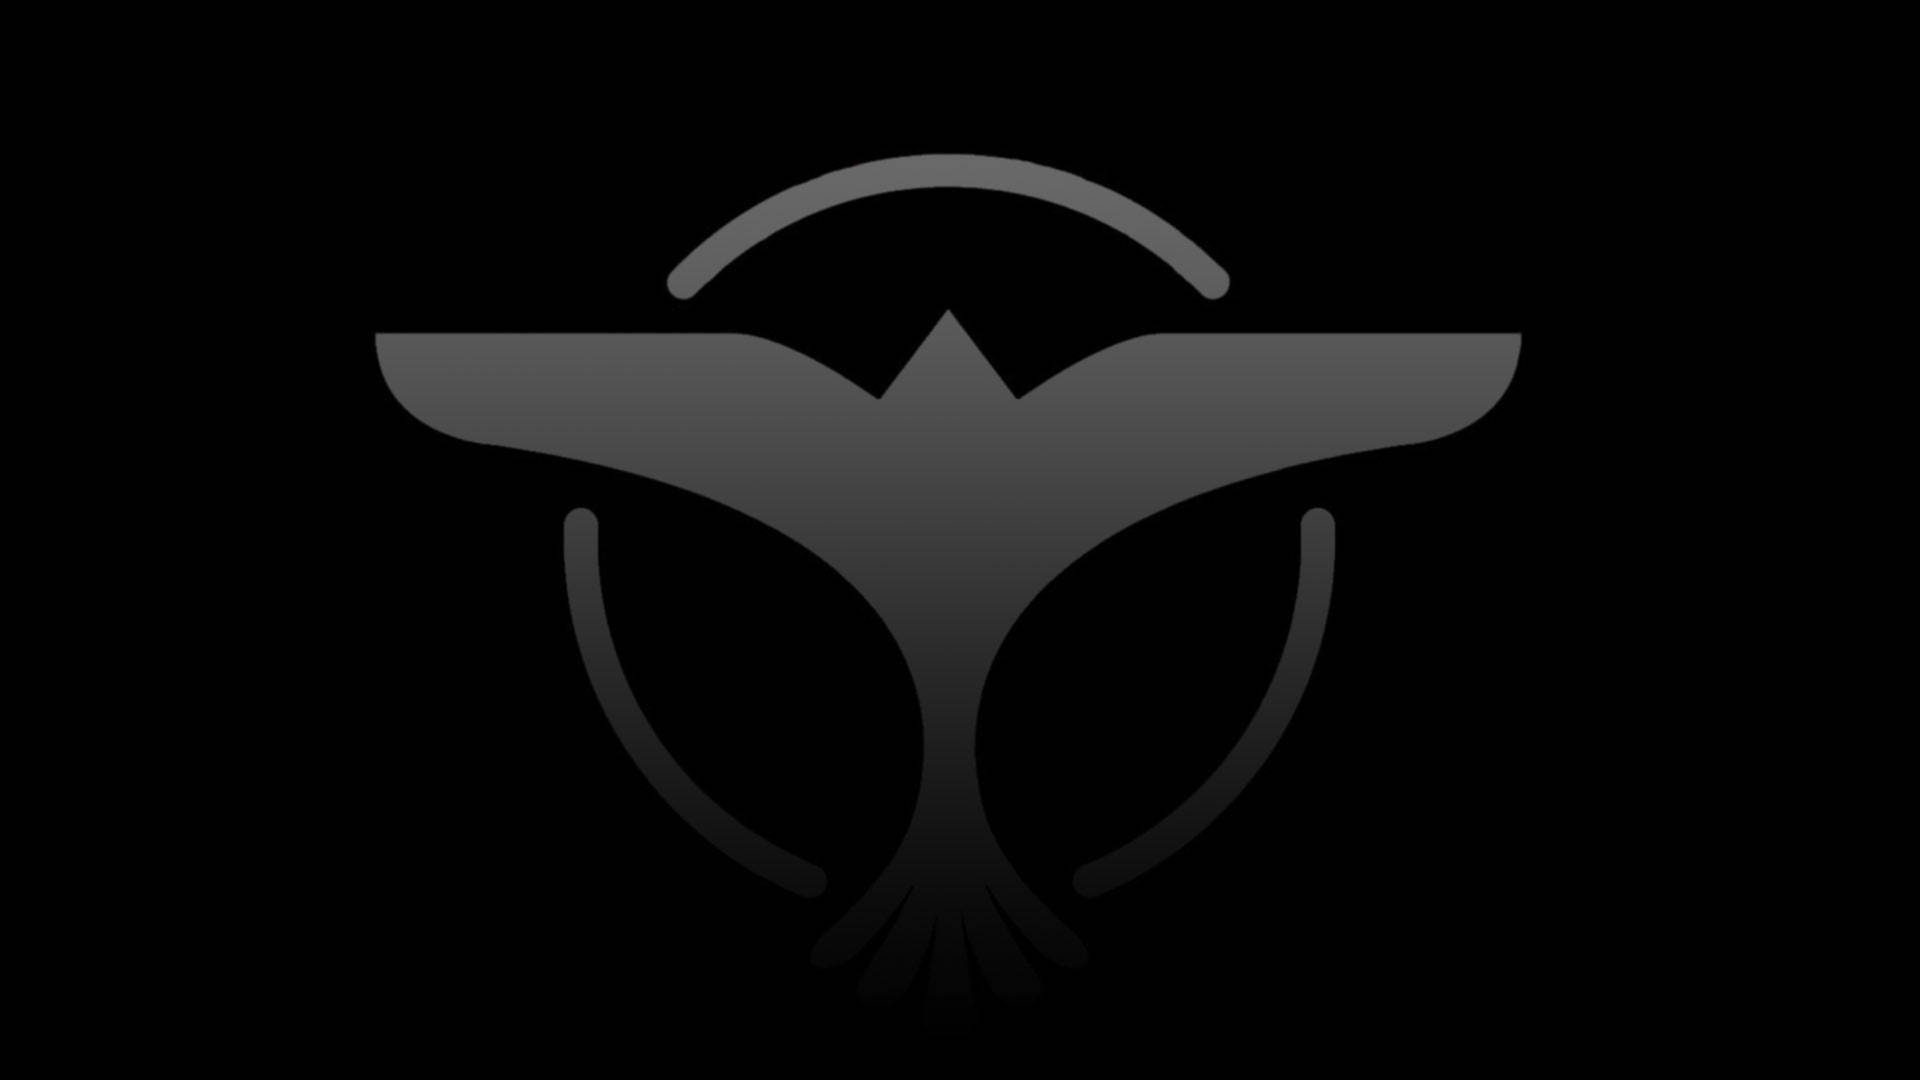 Legendary Dj Tiesto With His Signature Bird Emblem Background